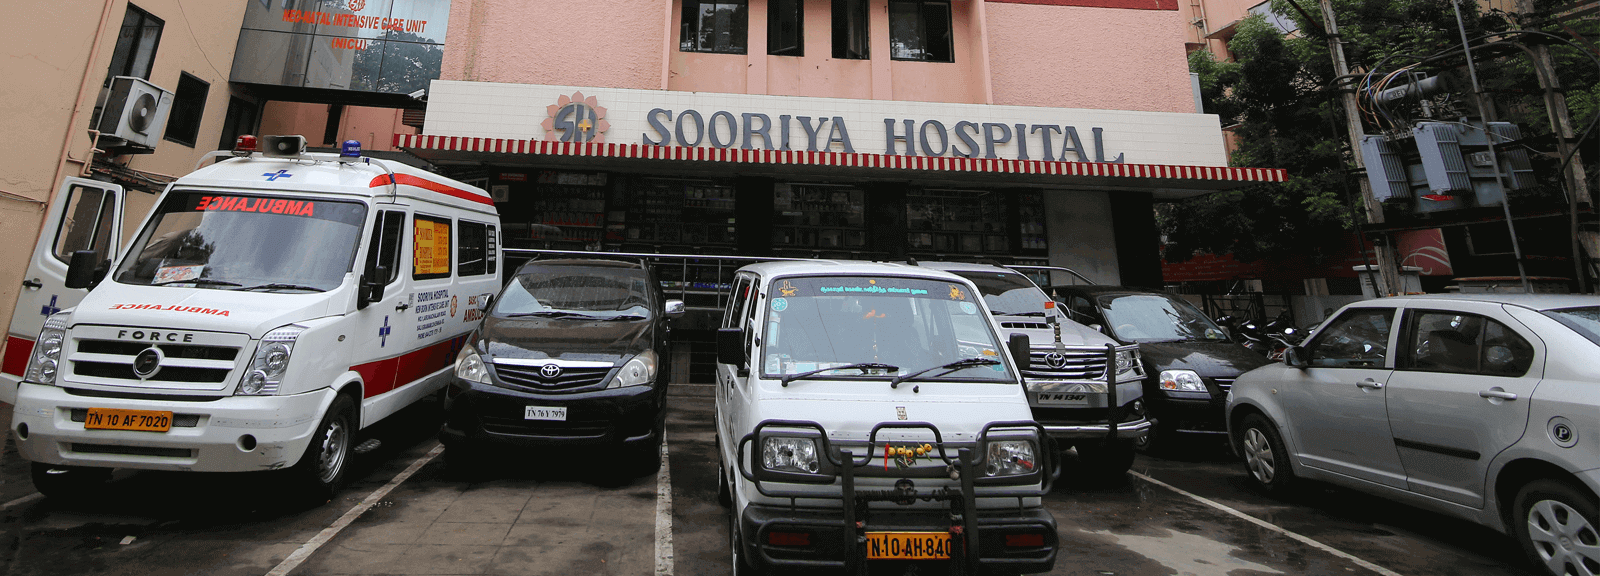 multispeciality hospitals in chennai